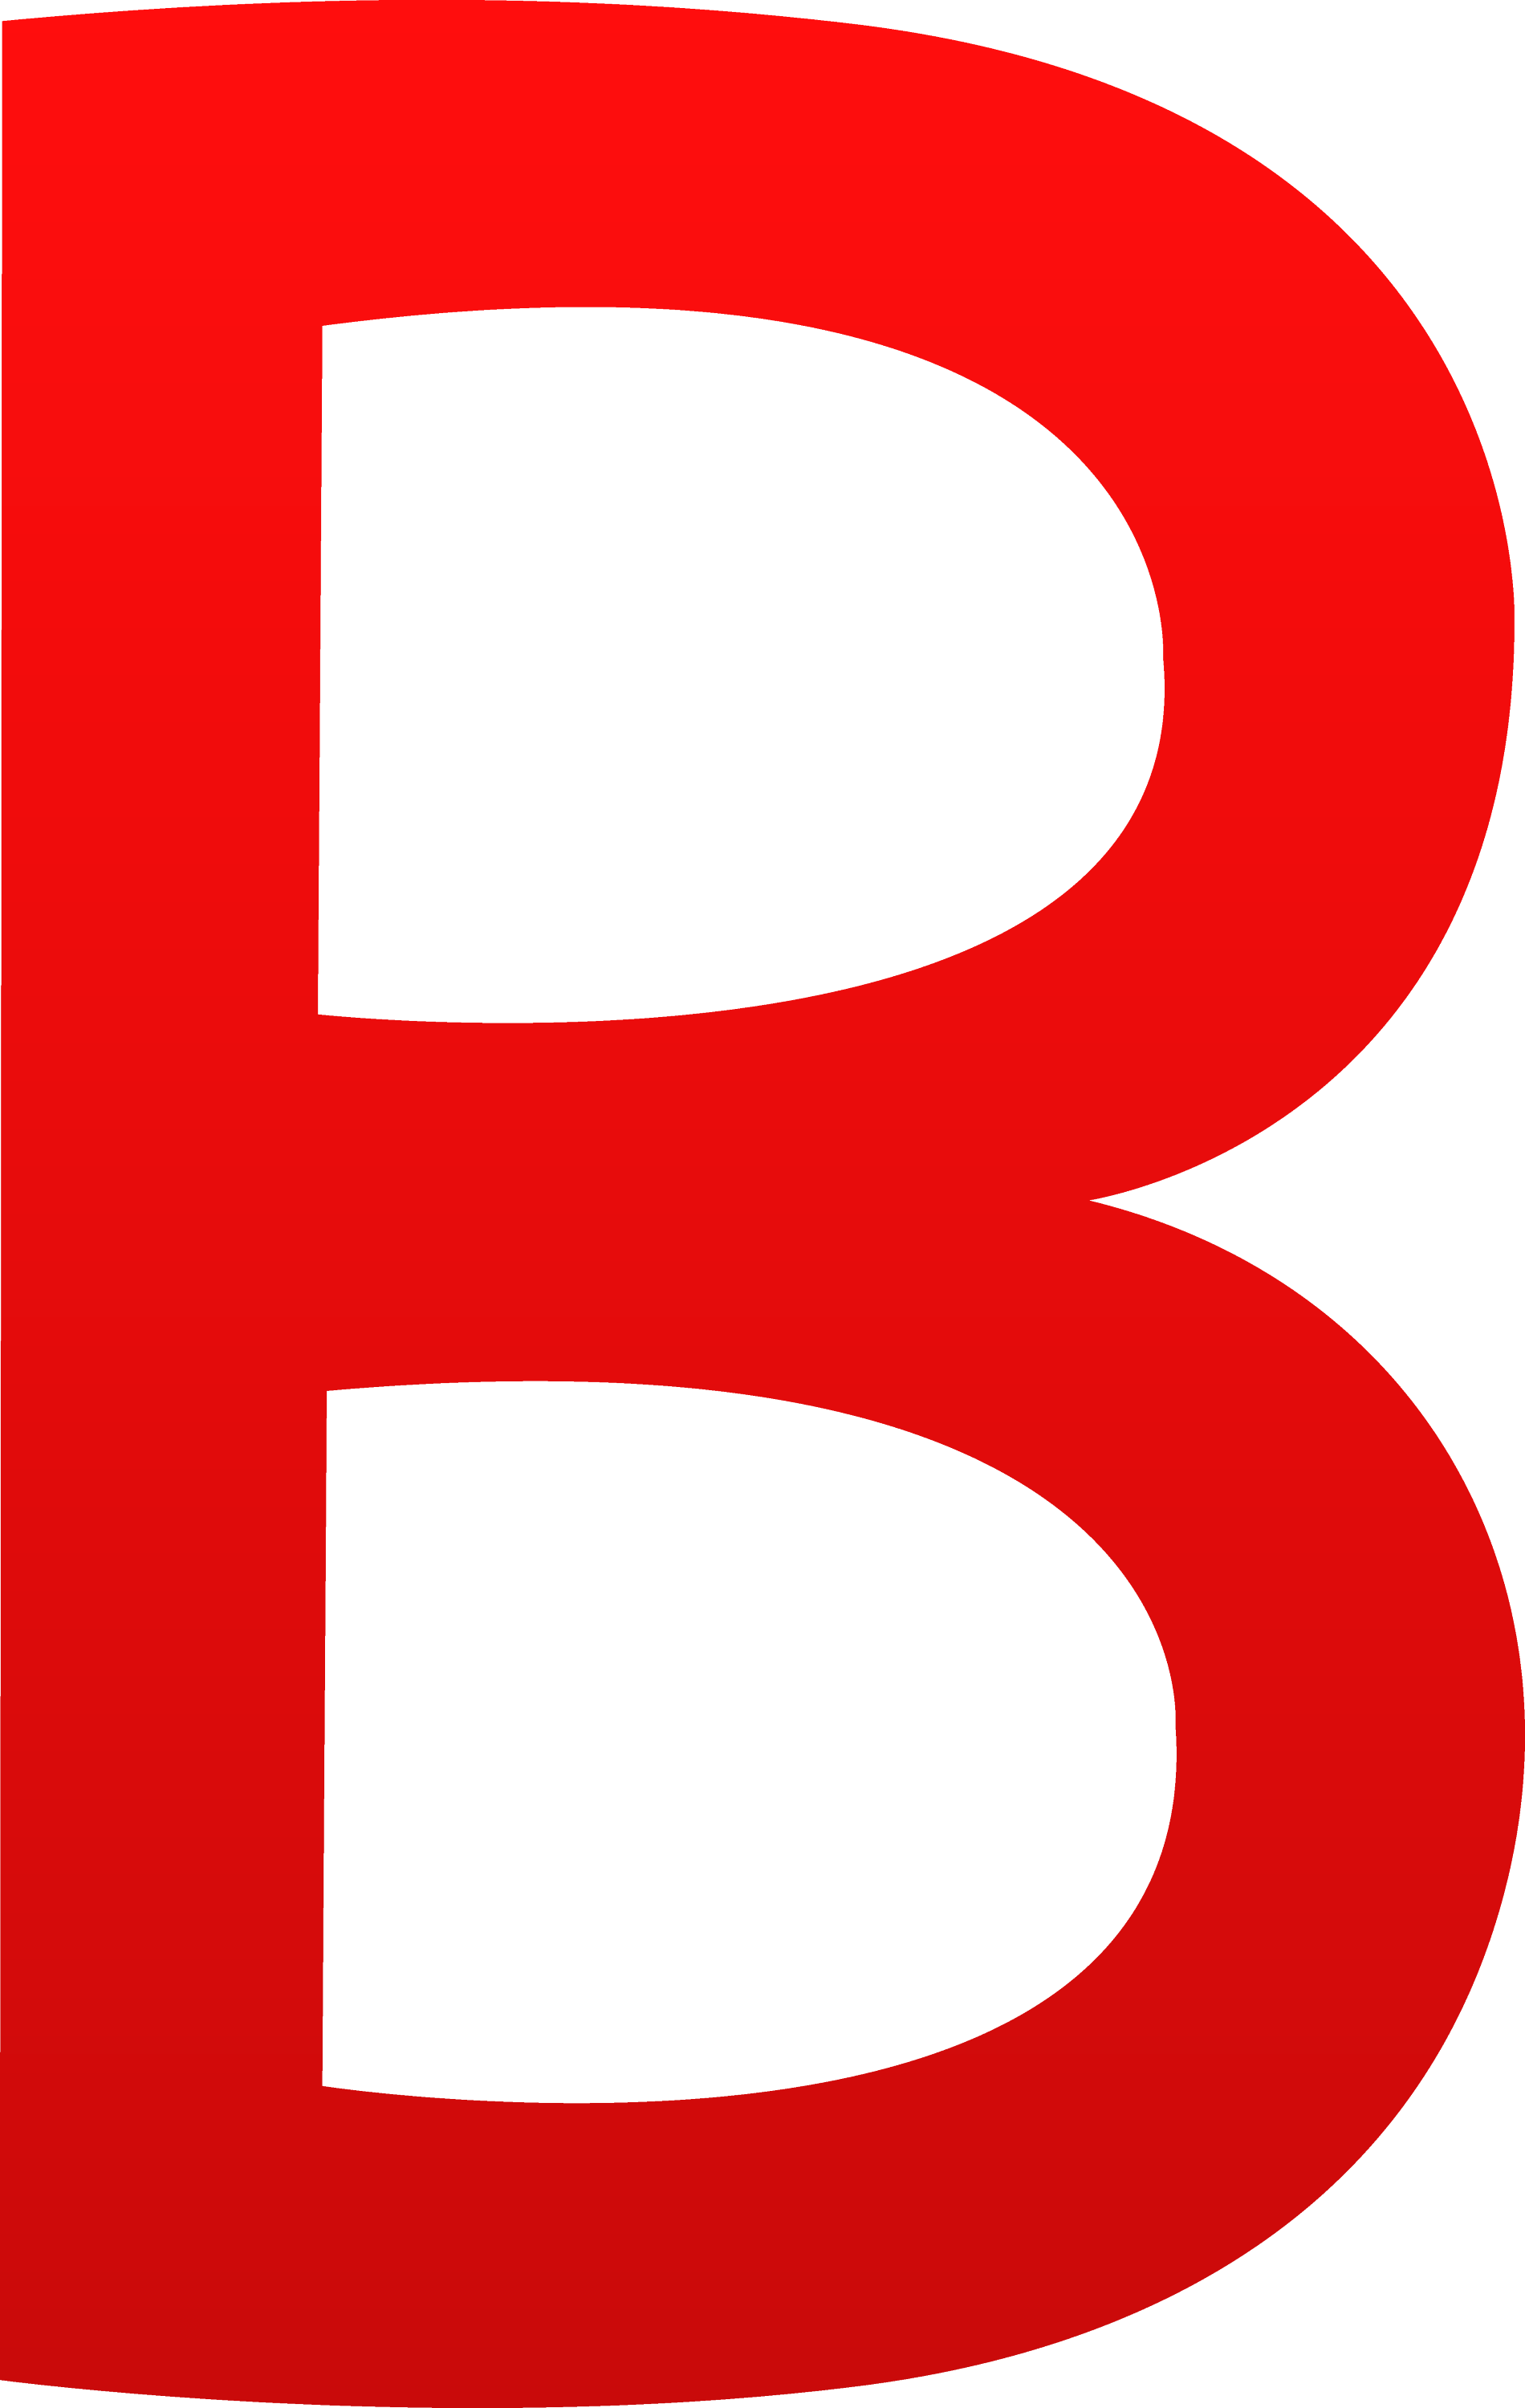 Letter B Designs The letter b